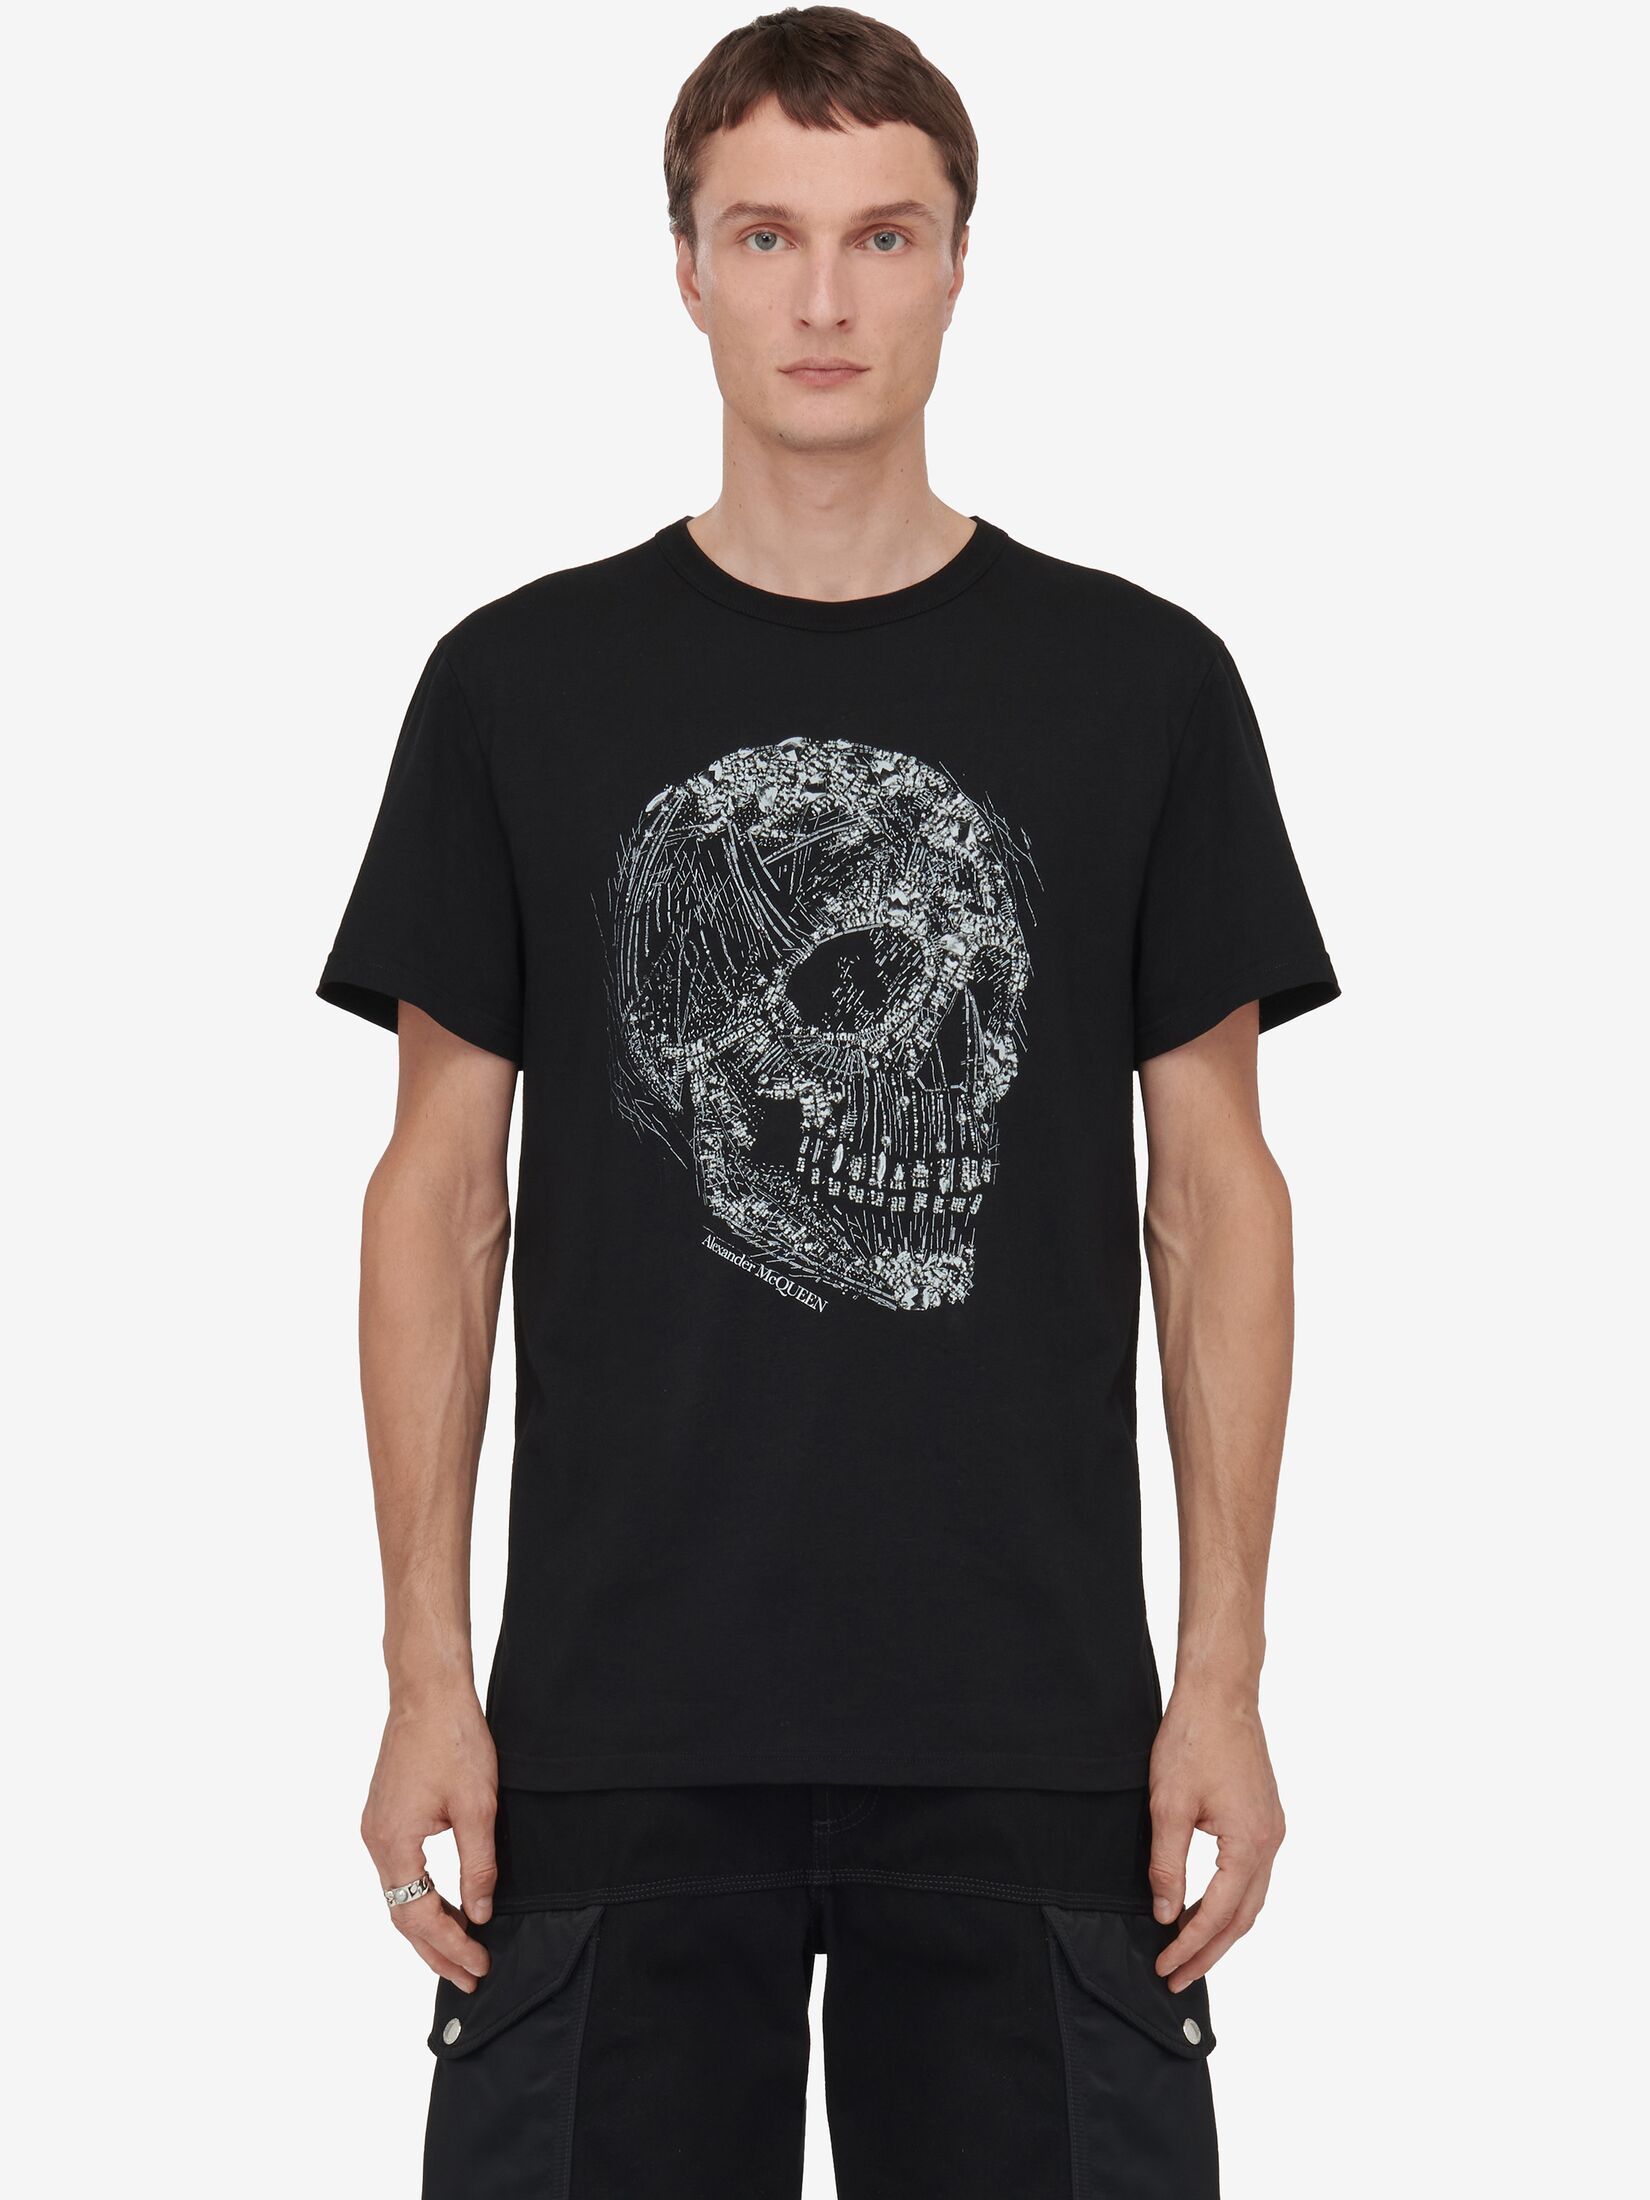 Crystal Skull T-shirt in McQueen Black/White Alexander | US